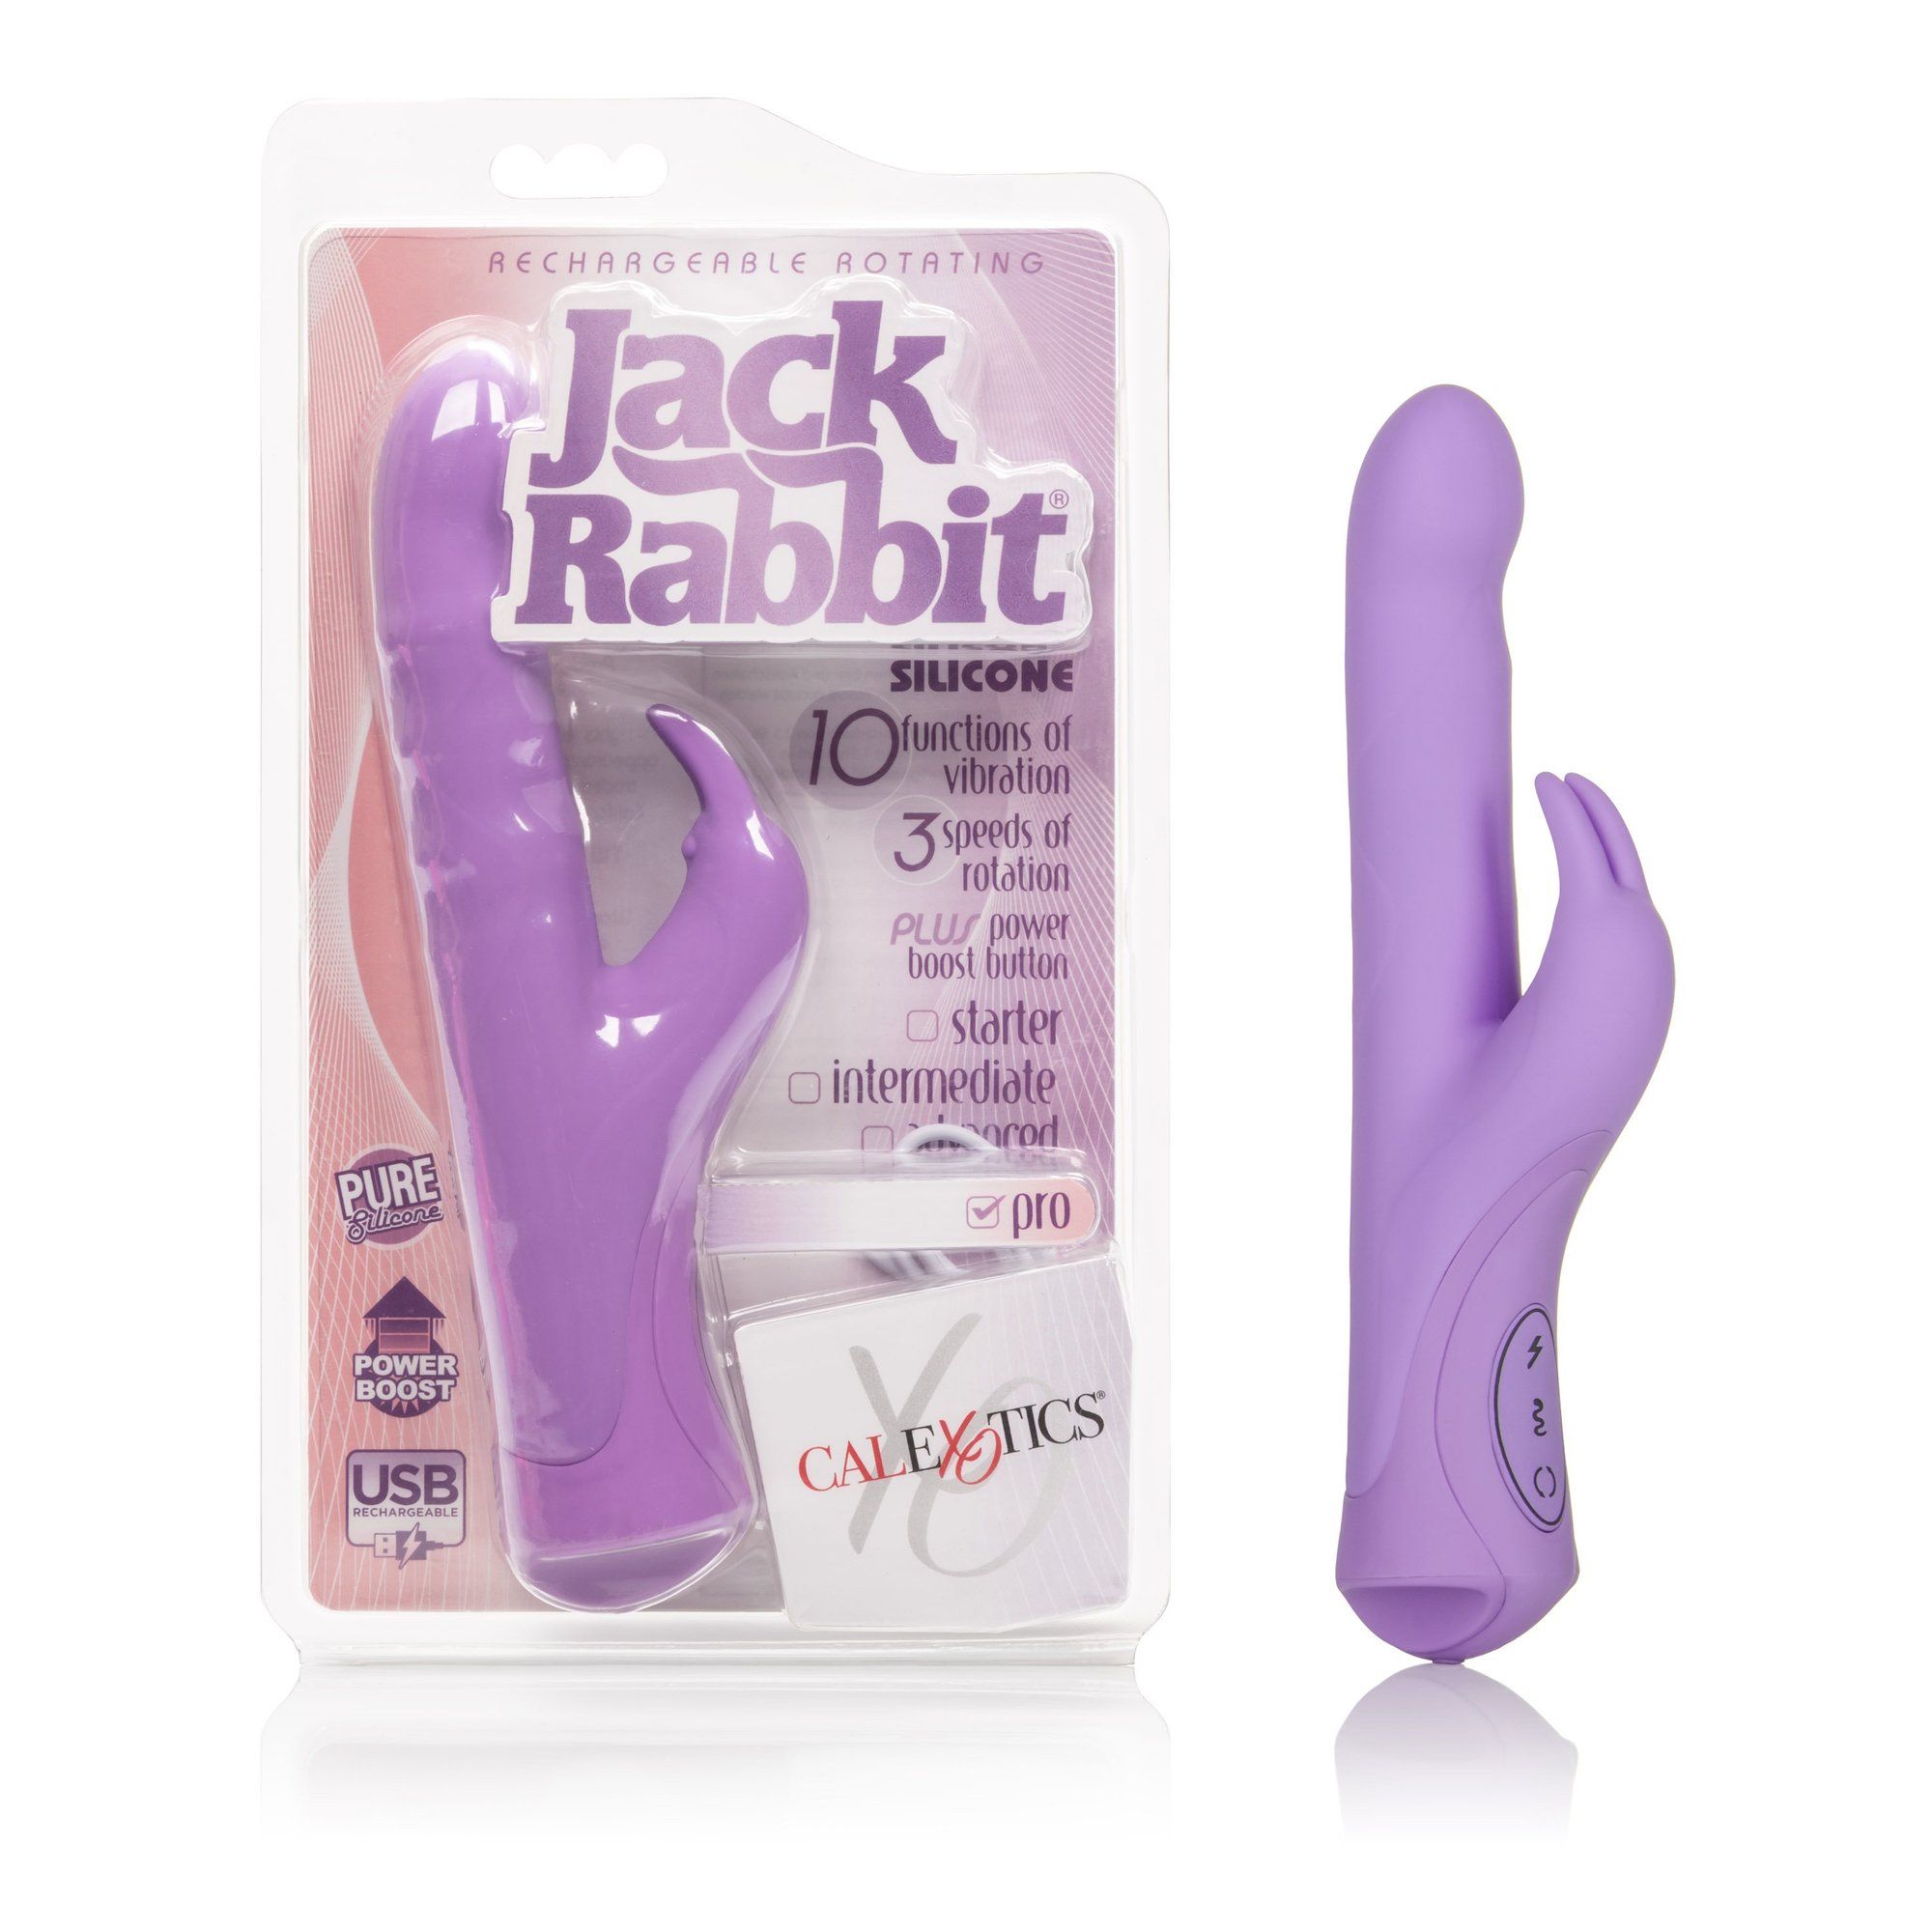 Purple rabbit jack vibrator picture